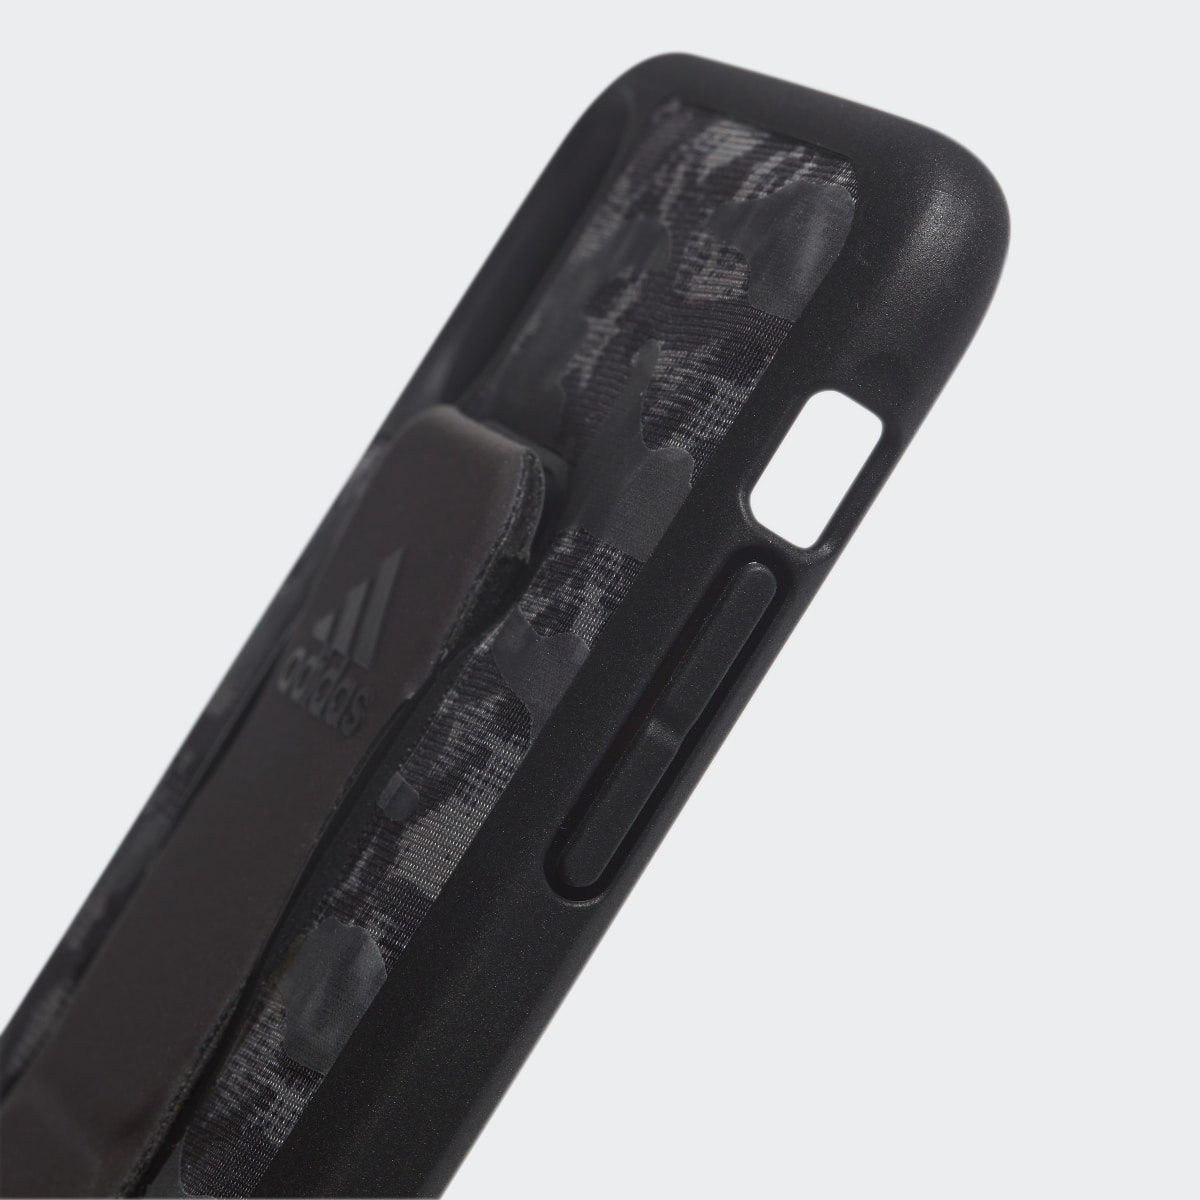 Adidas Grip Case iPhone X. 4